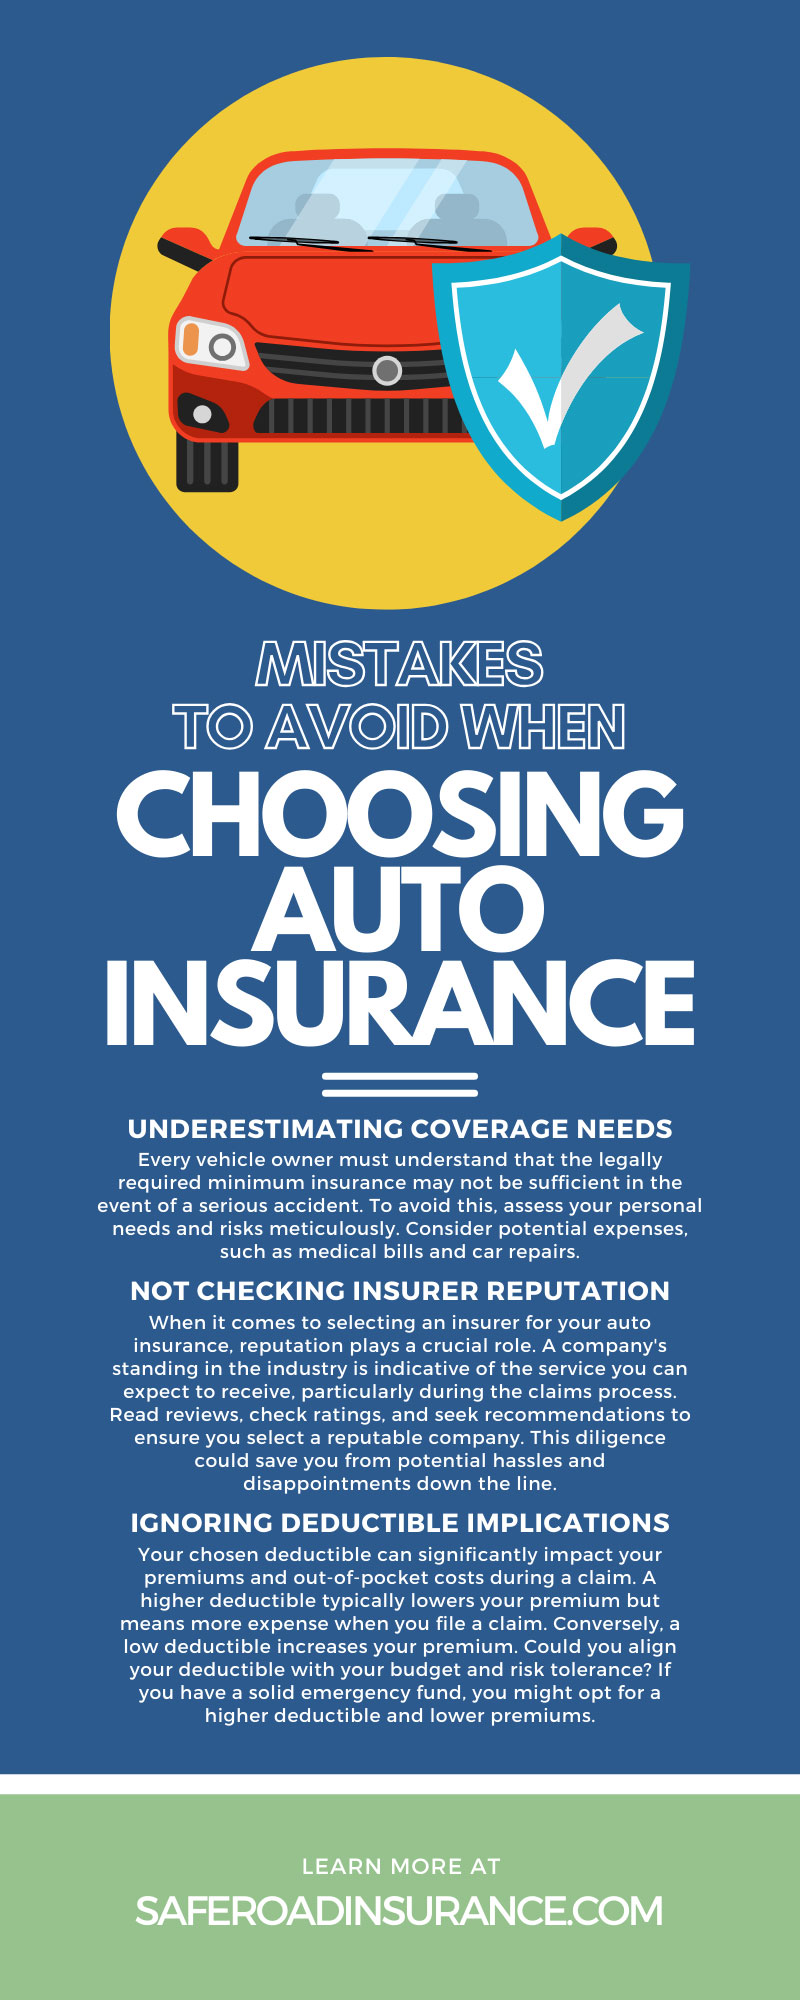 10 Mistakes To Avoid When Choosing Auto Insurance